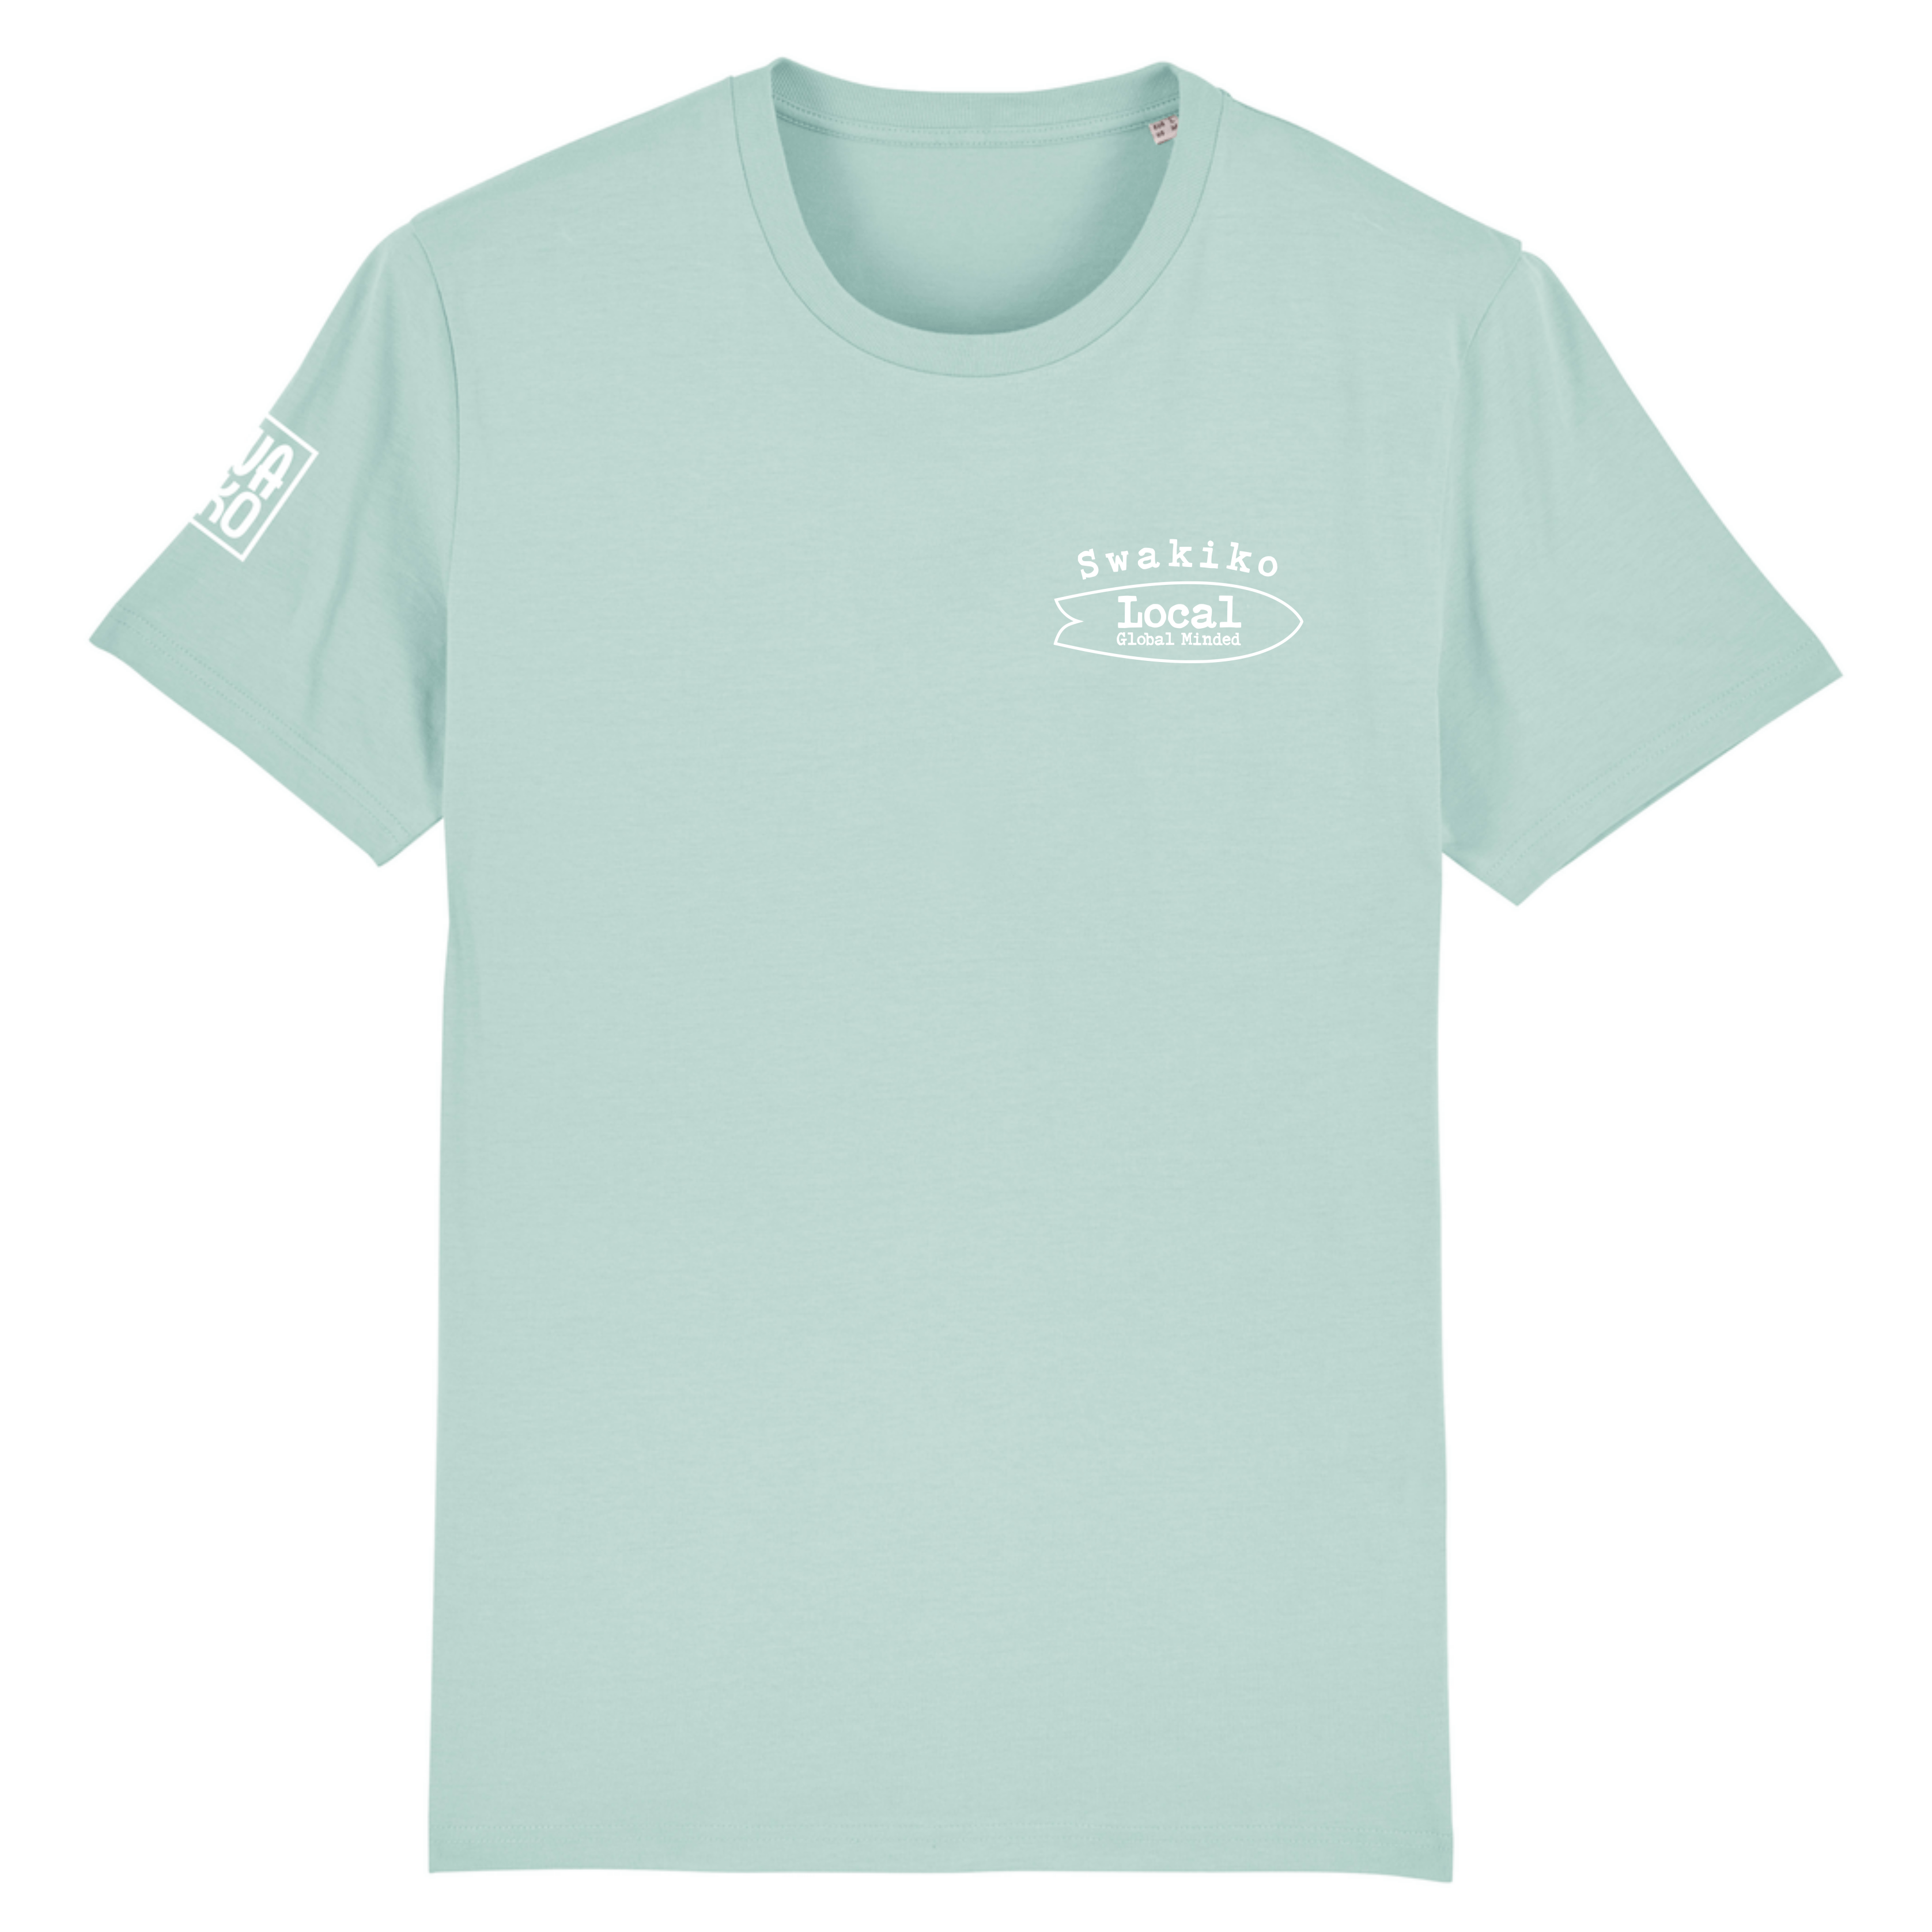 Turquoise T-shirt met Swakiko bortslogo en surfboard